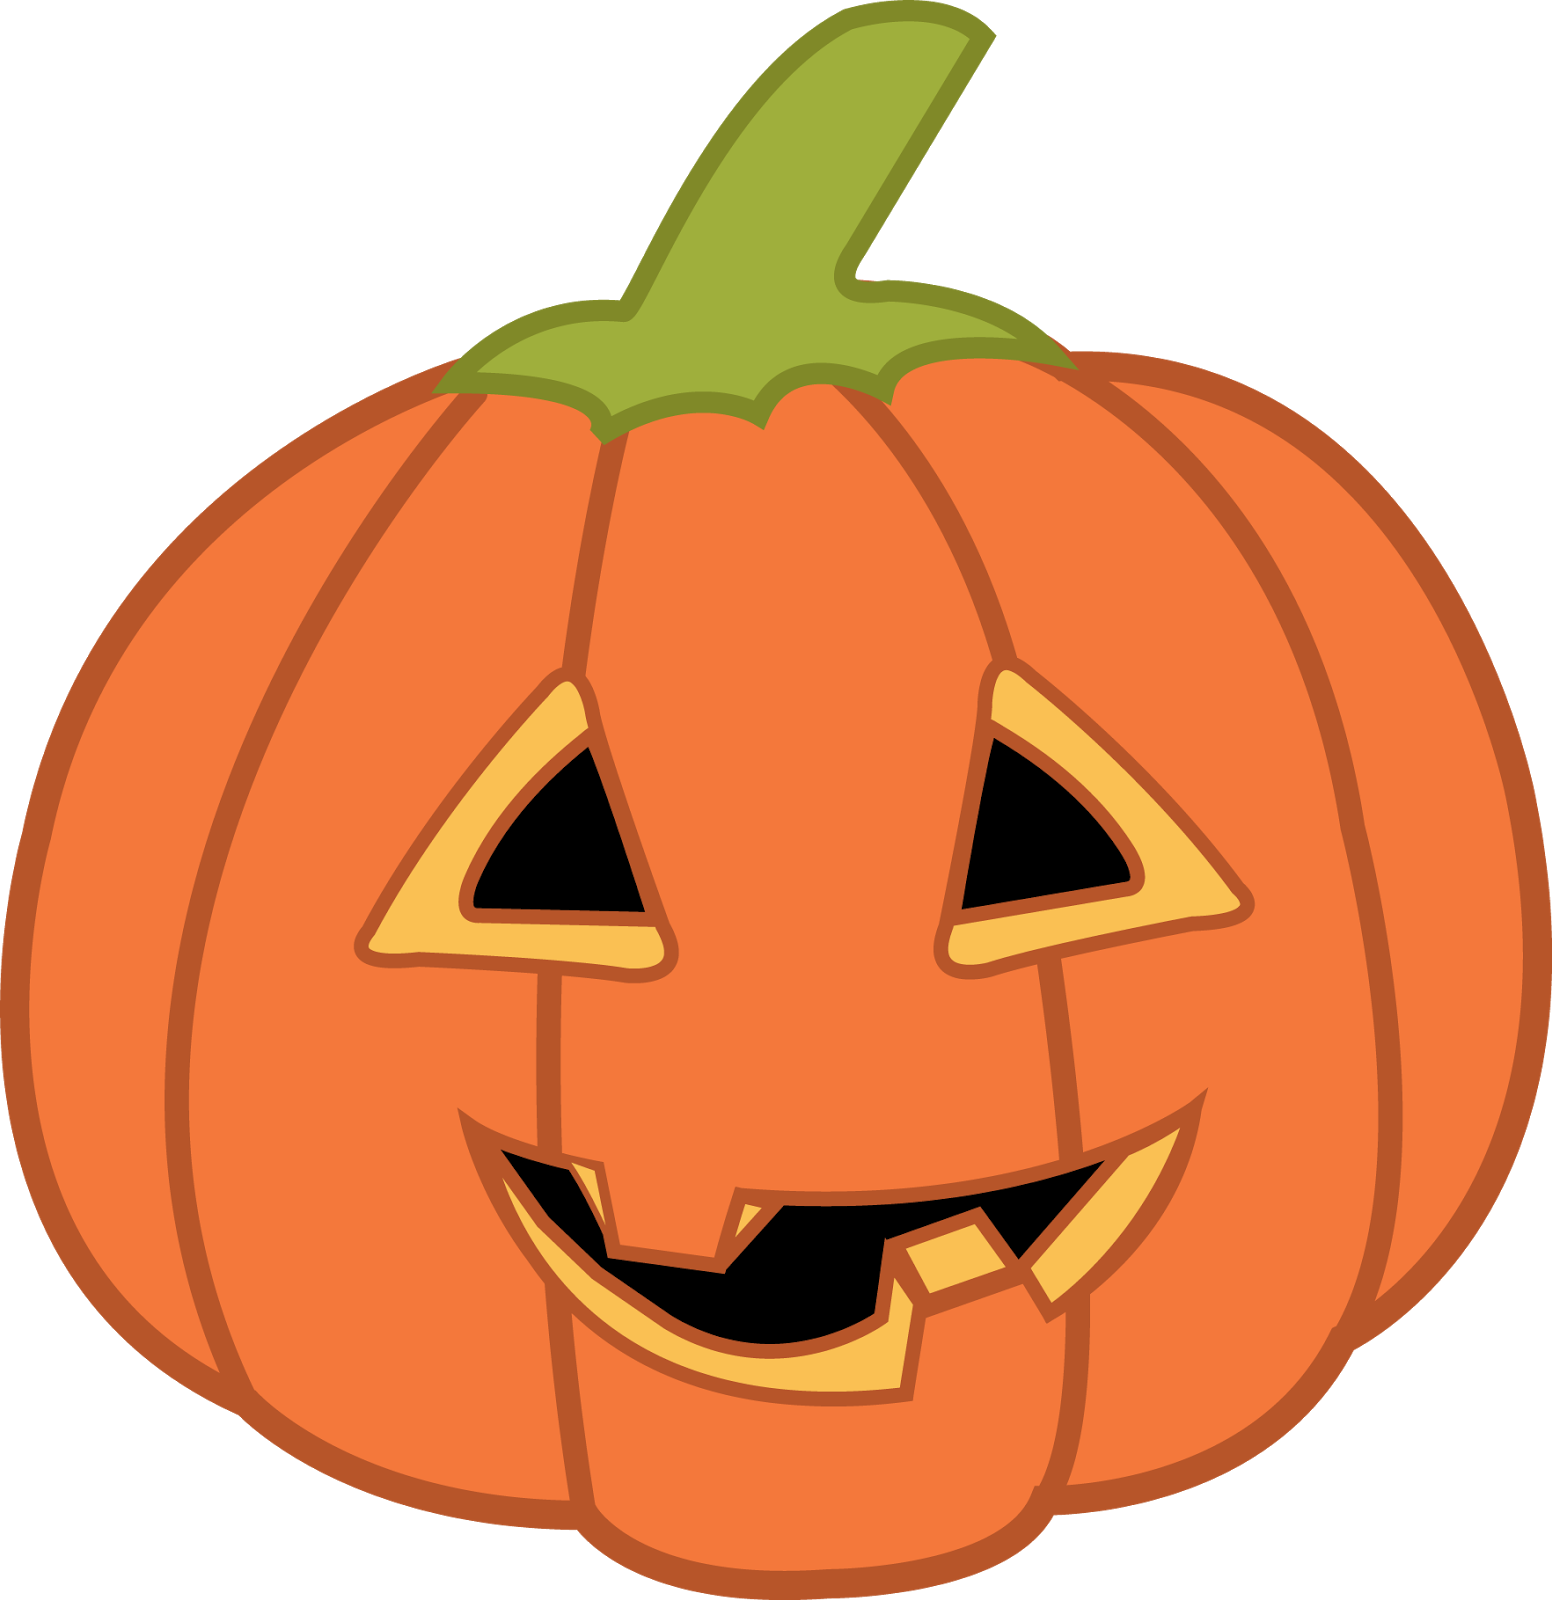 Halloween Pumpkin Clipart Oh My Fiesta in english